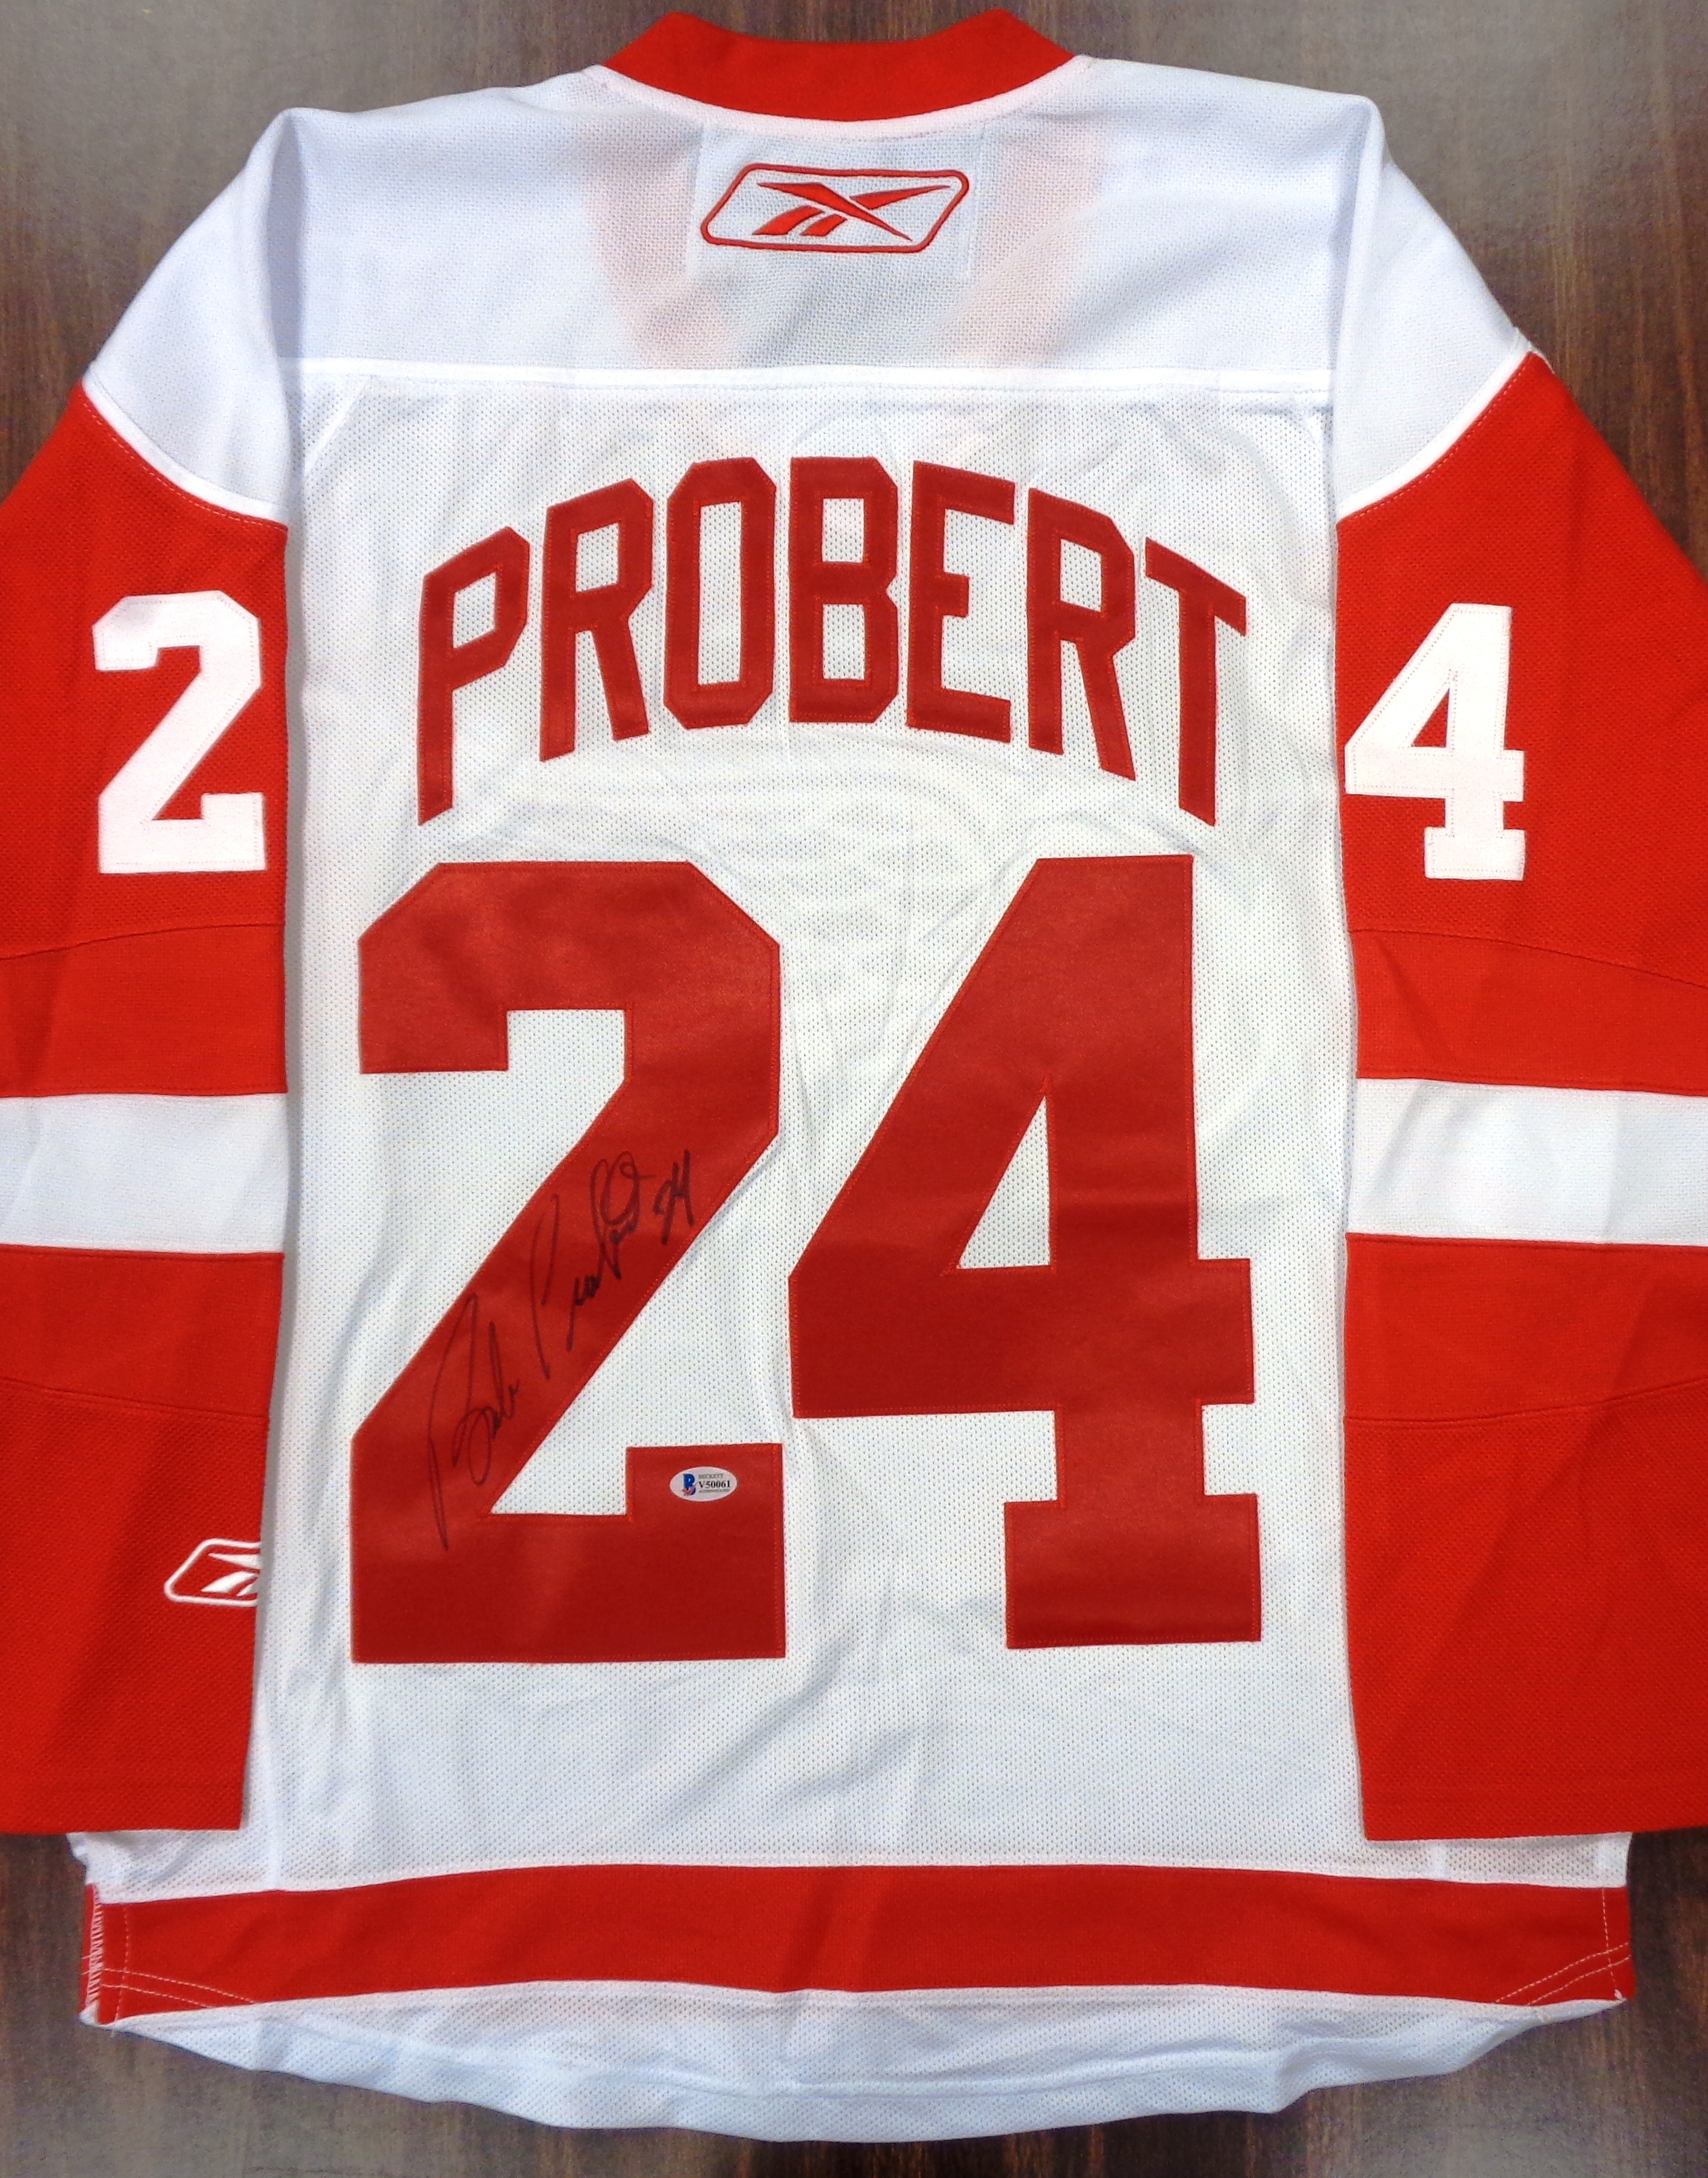 Bob Probert Jersey for sale